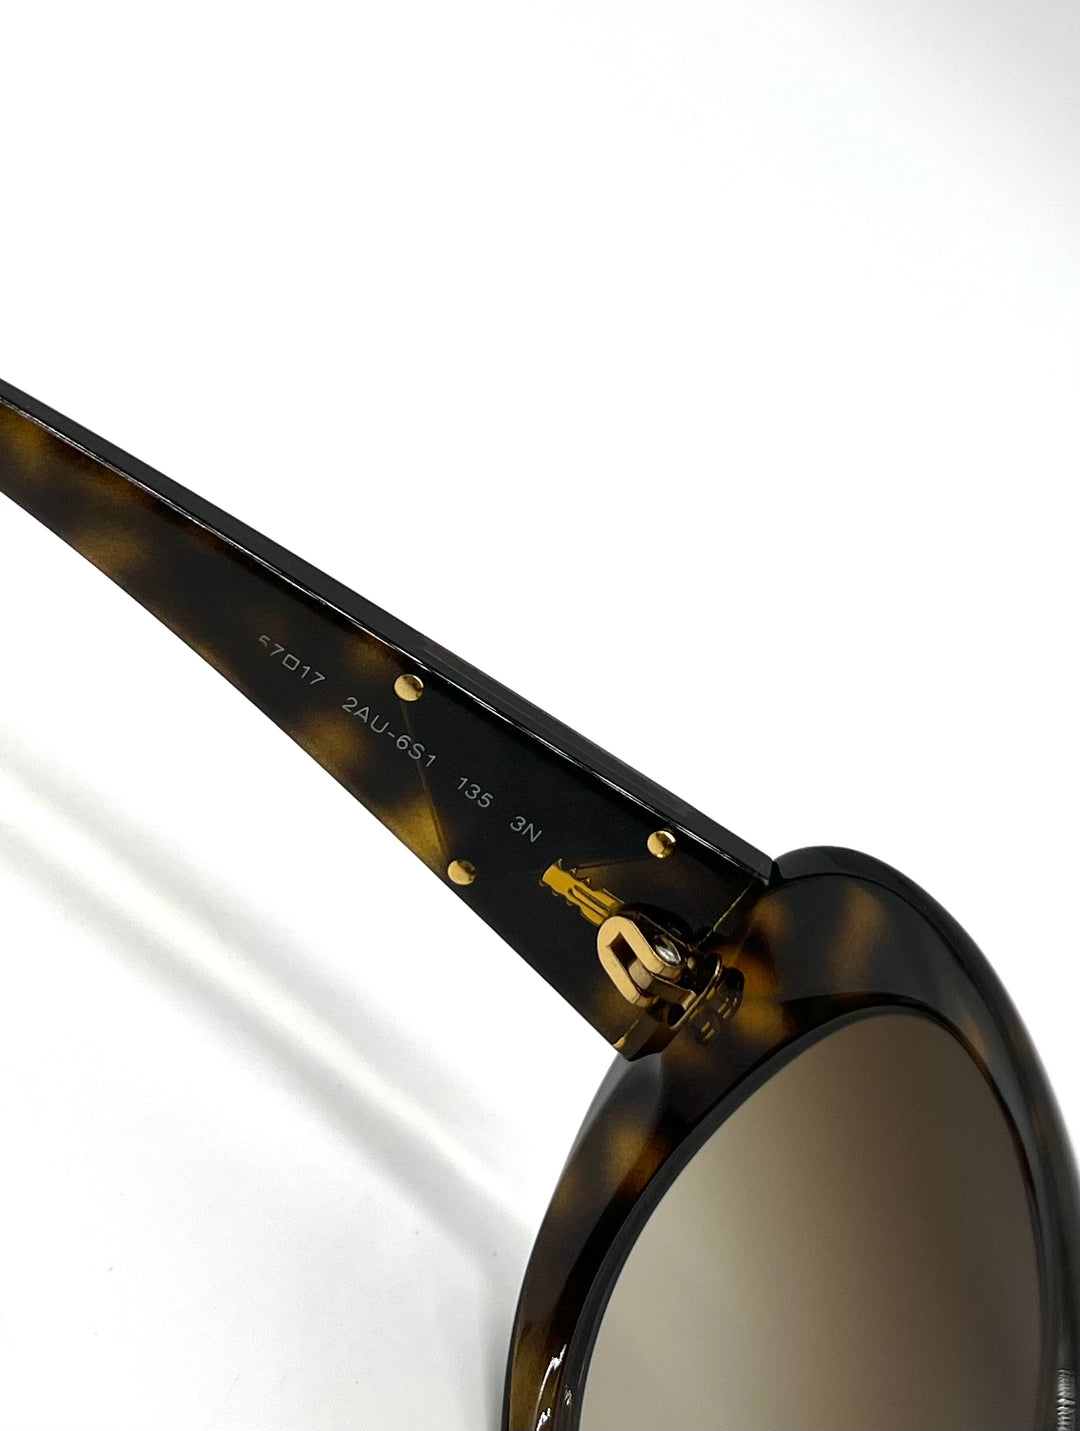 PRADA Brown Oversized Oval Frame Sunglasses